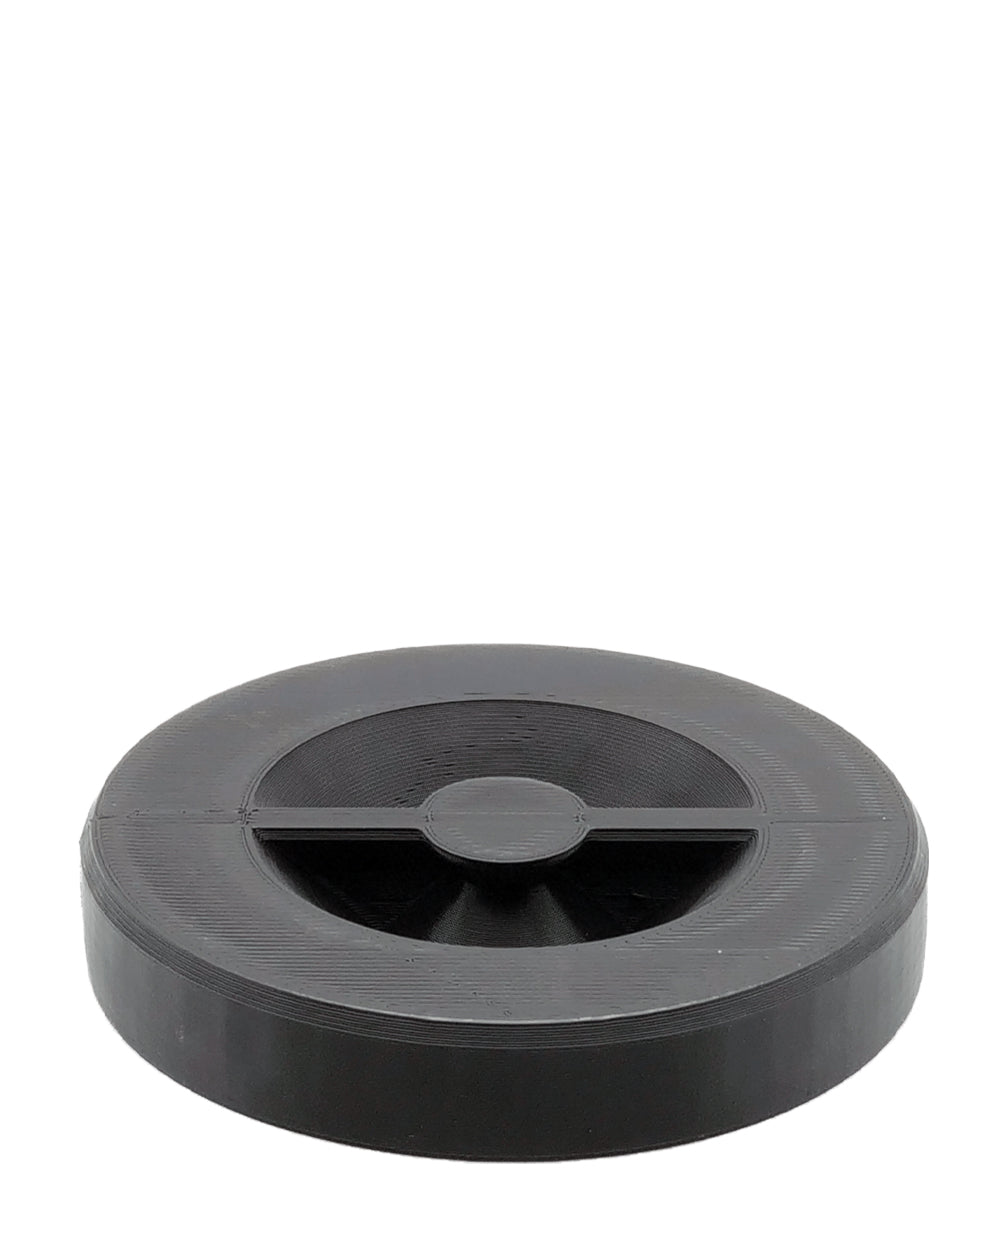 HUMBOLDT | Black Pre-Rolled Cones Filling Machine Cartridge 98mm | Fill 55 Cones Per Run - 3